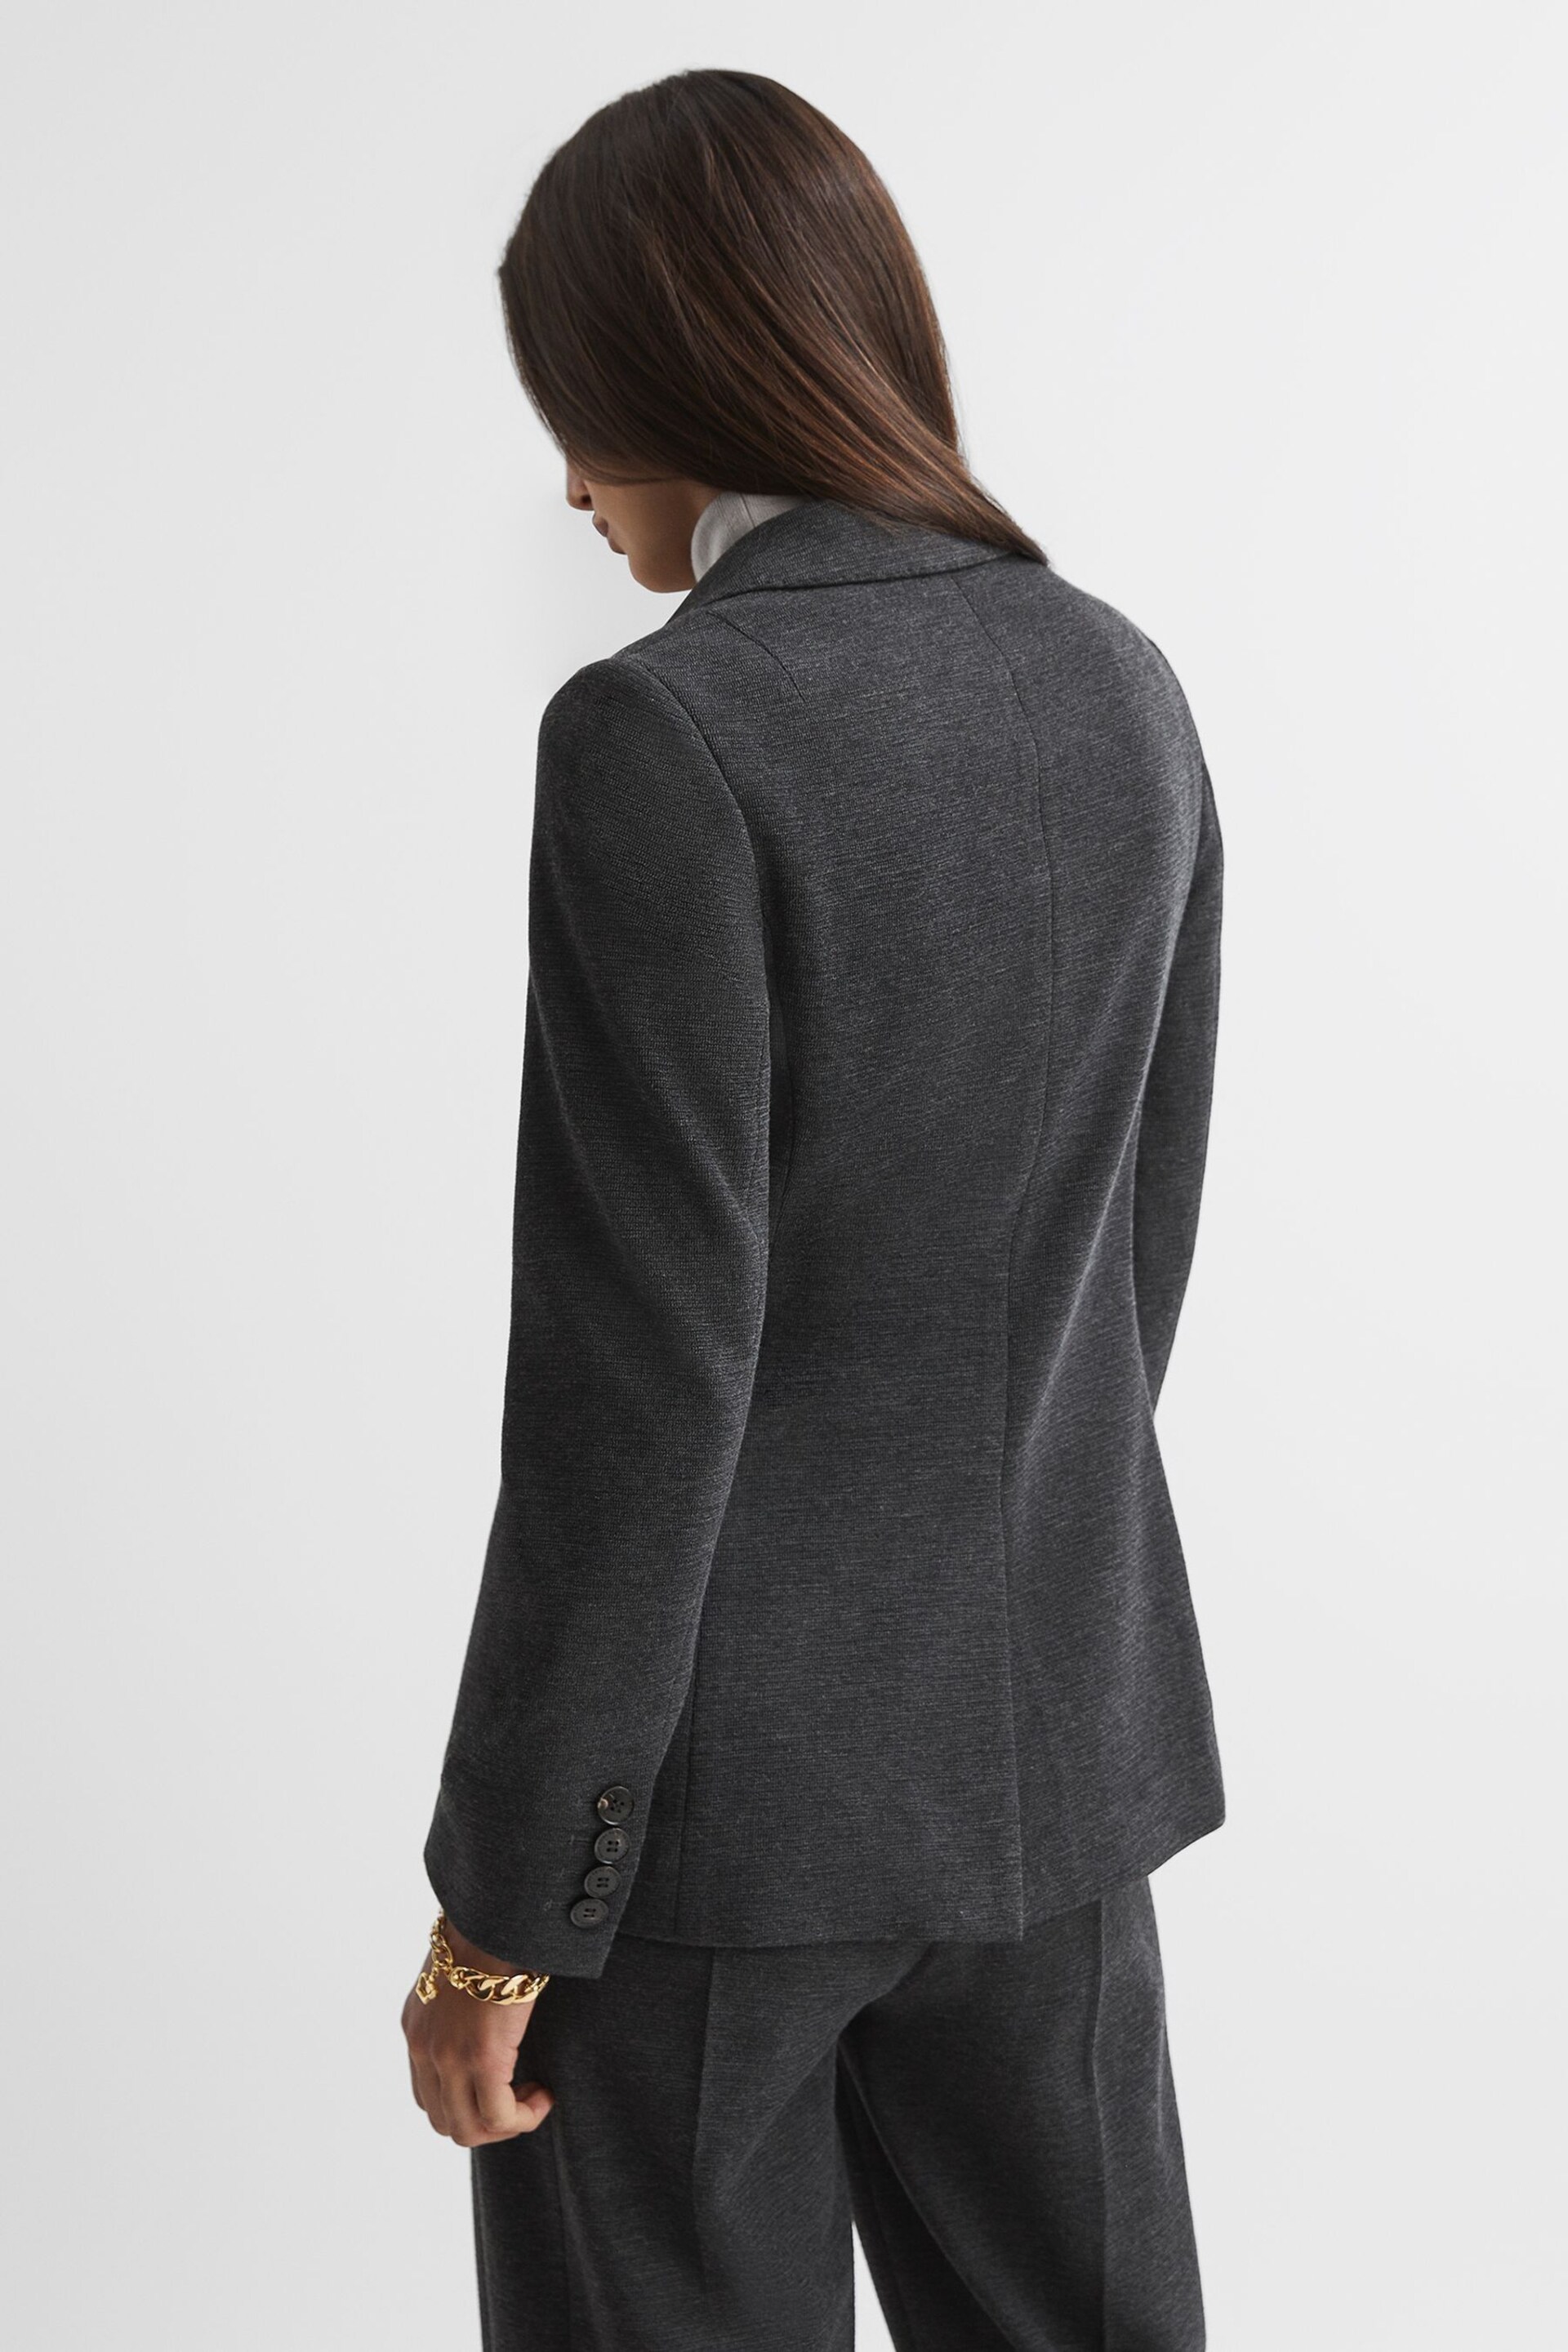 Reiss Grey Melange Iria Double Breasted Wool Blend Suit Blazer - Image 3 of 5